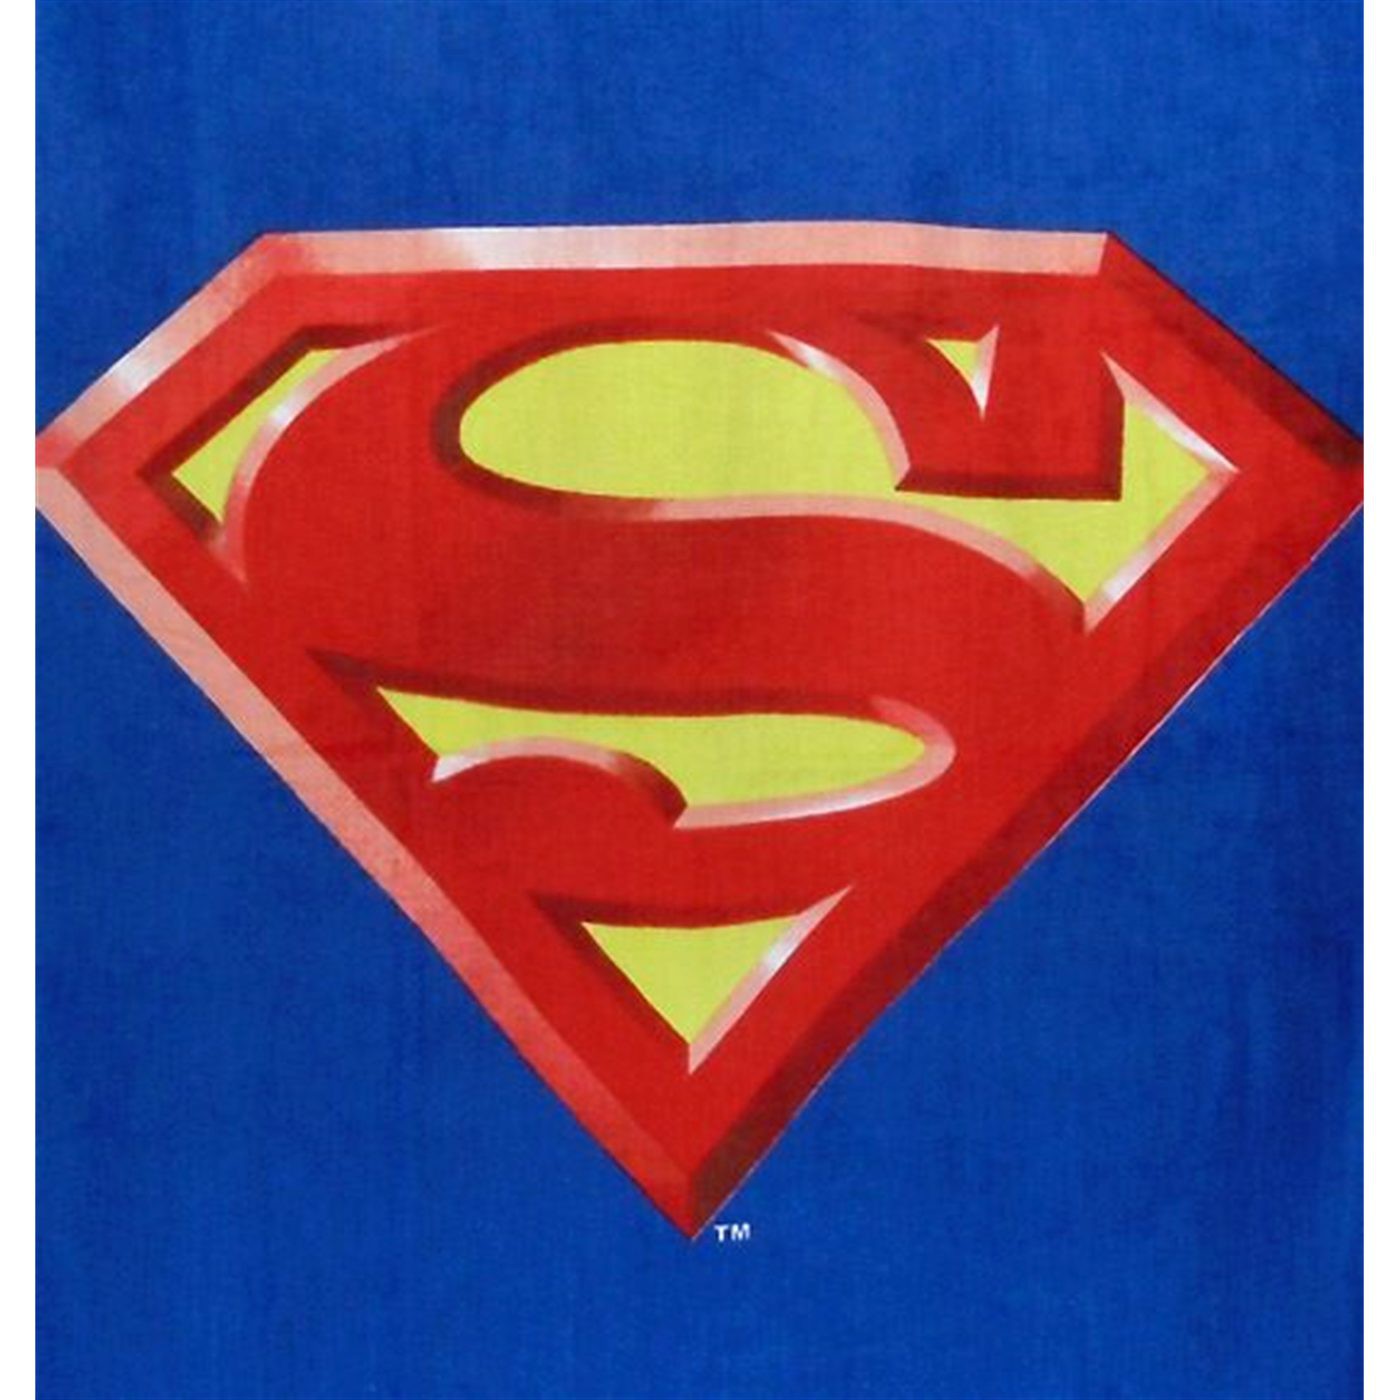 Superman Symbol Beach Towel